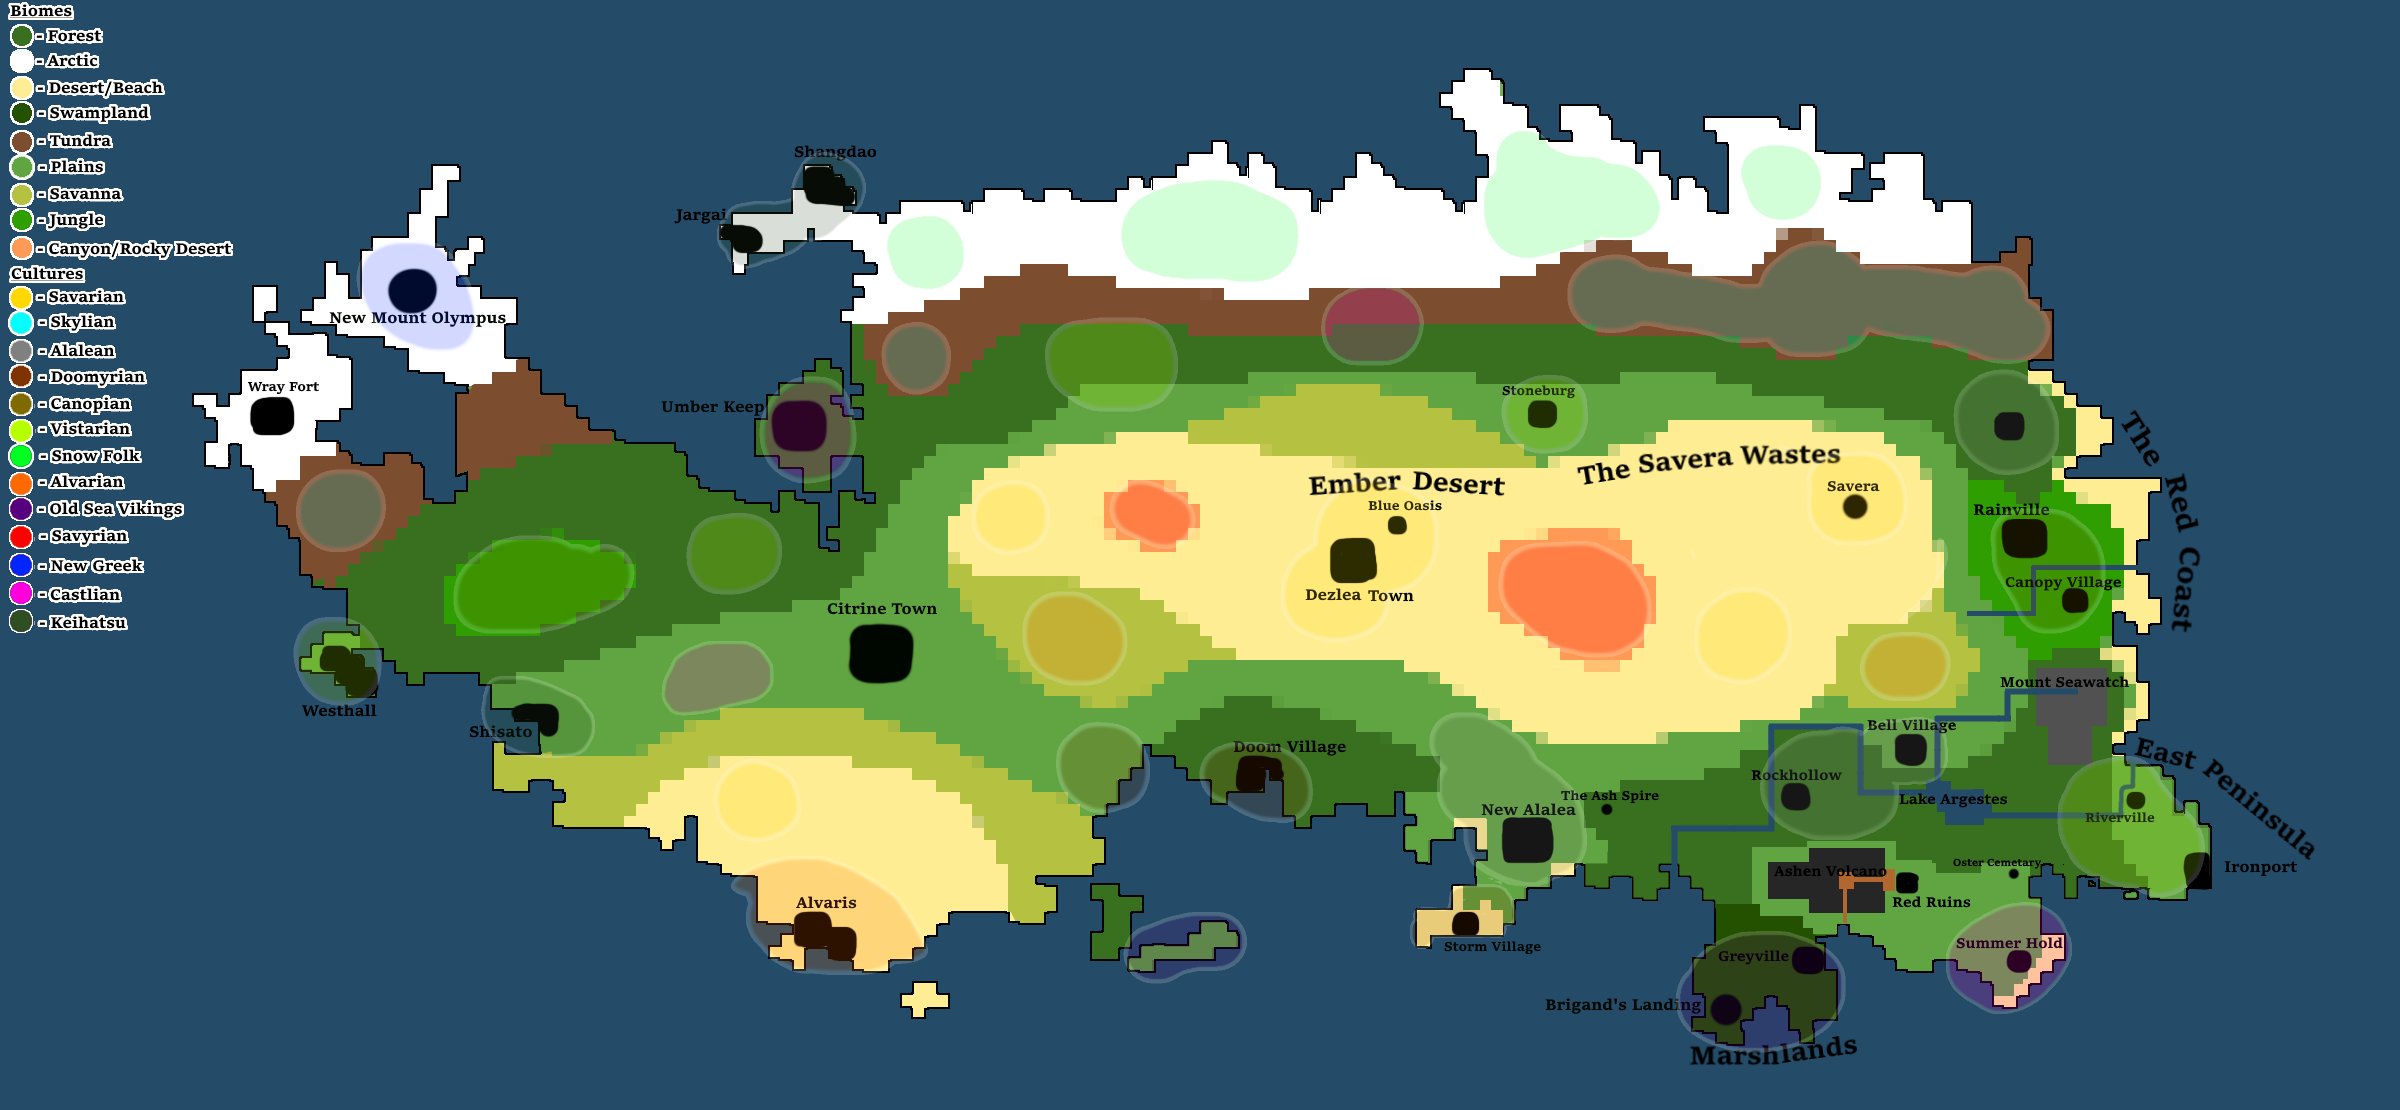 Creating a map of magius - Exploring - Arcane Odyssey